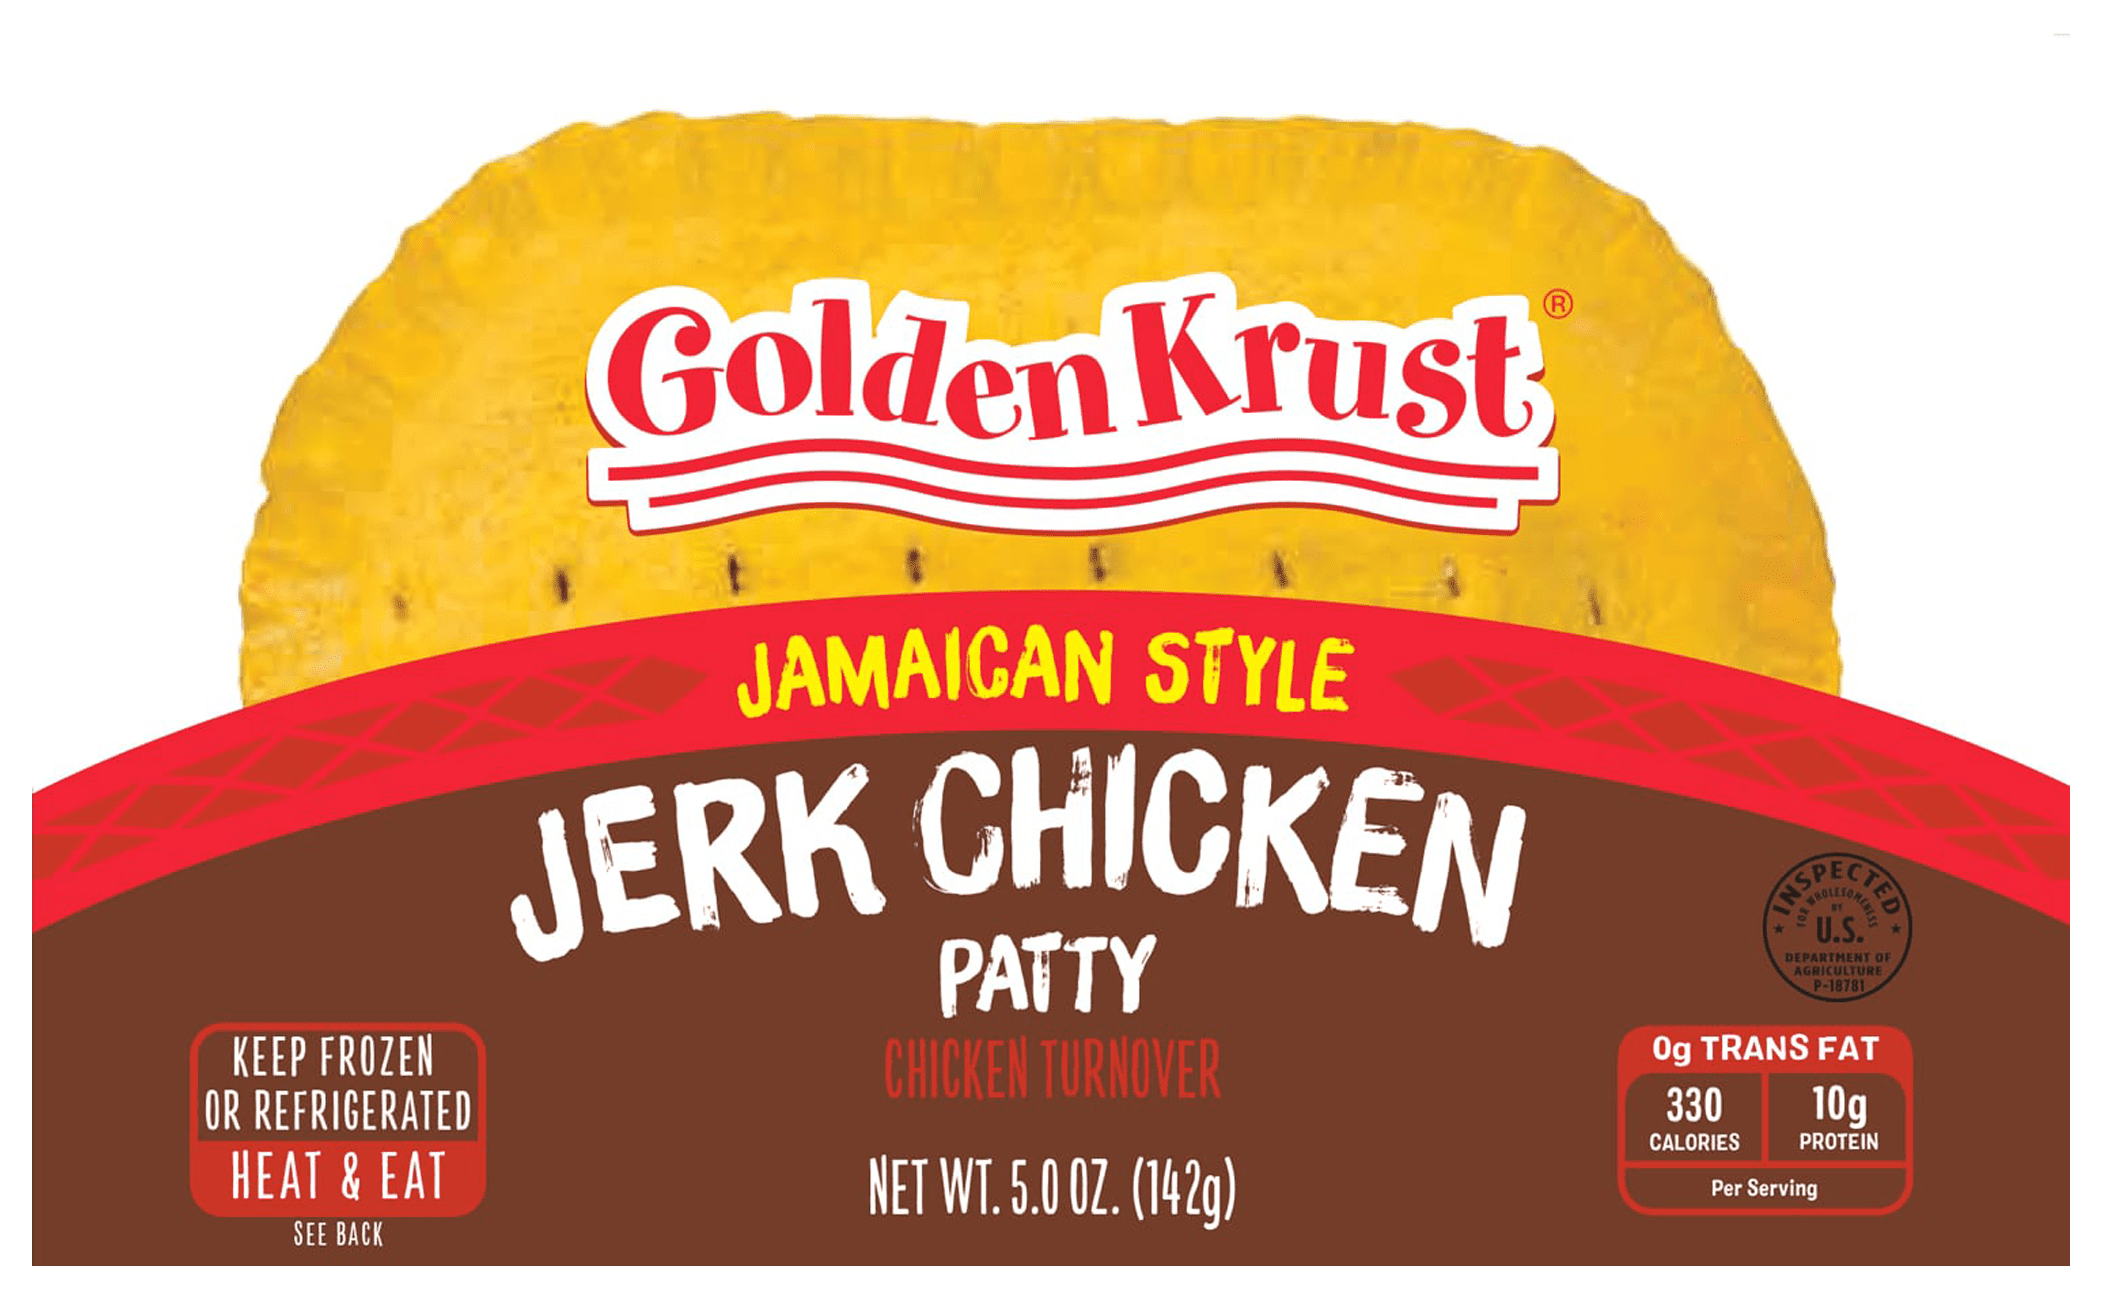 GK Jerk Chicken Patty Product